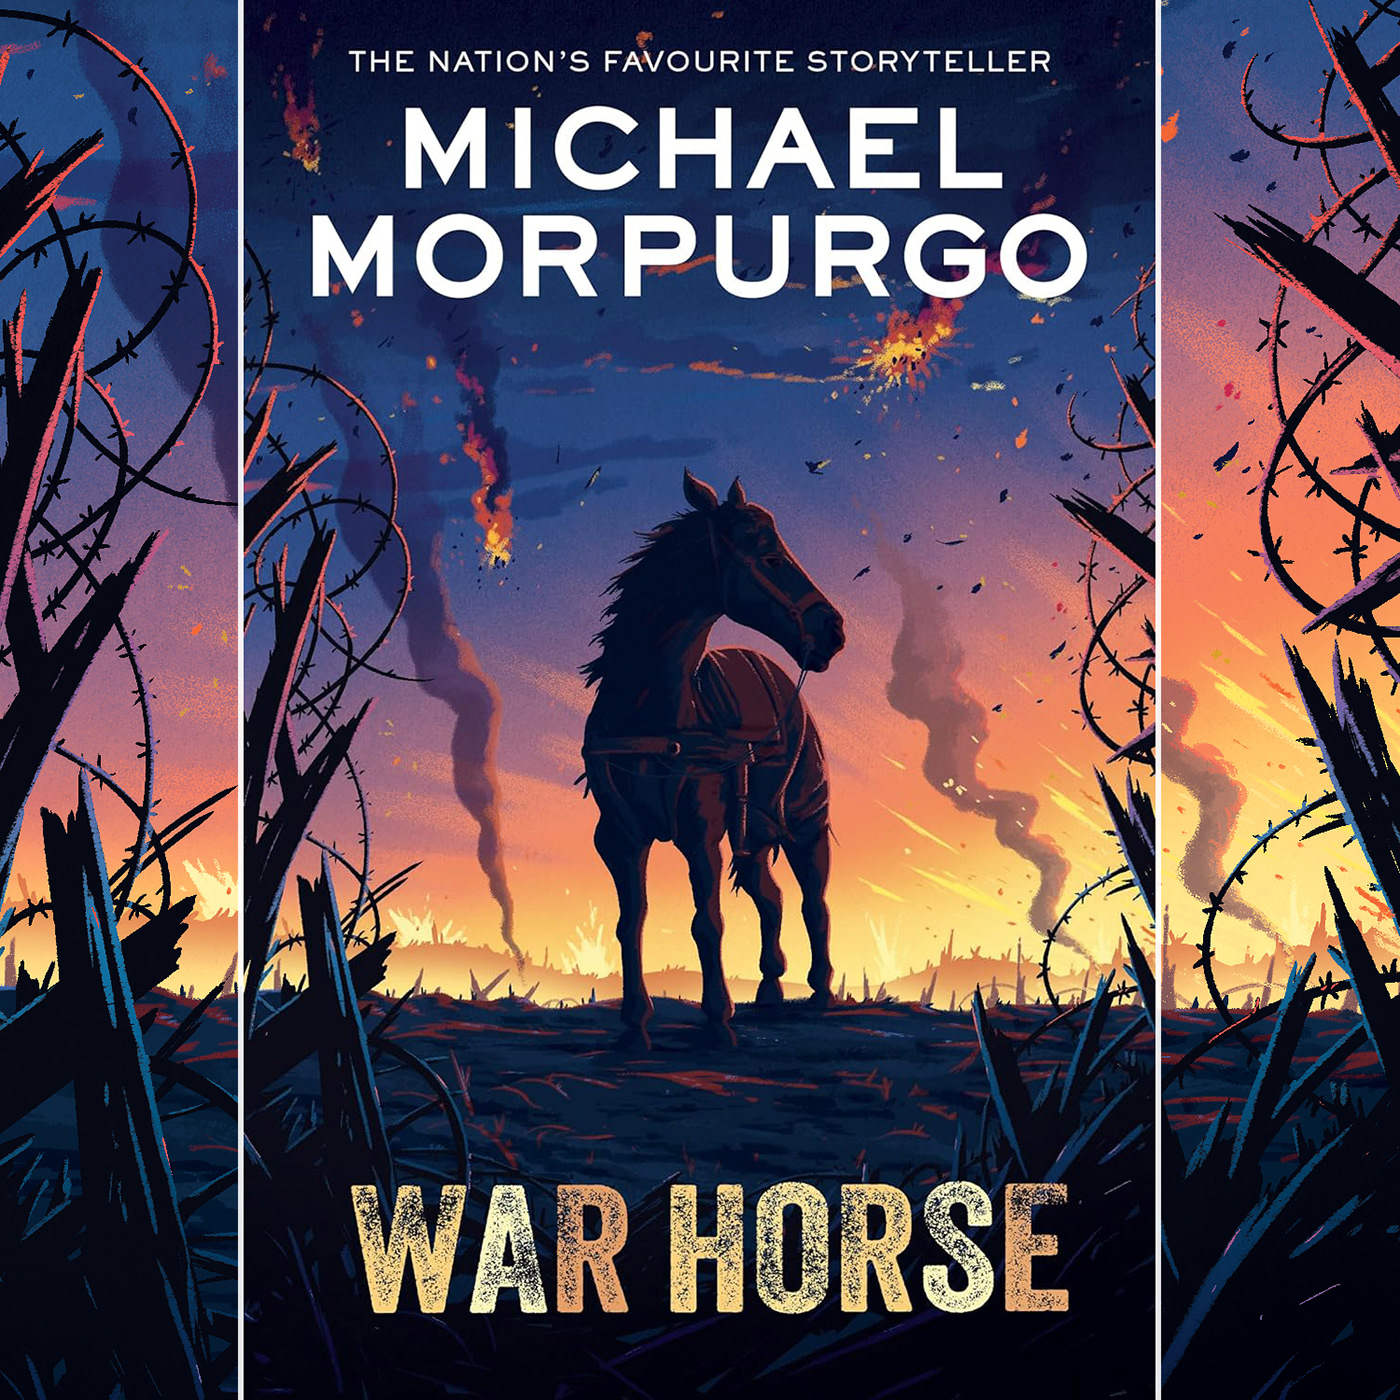 horse book bookcover morpurgo War warhorse